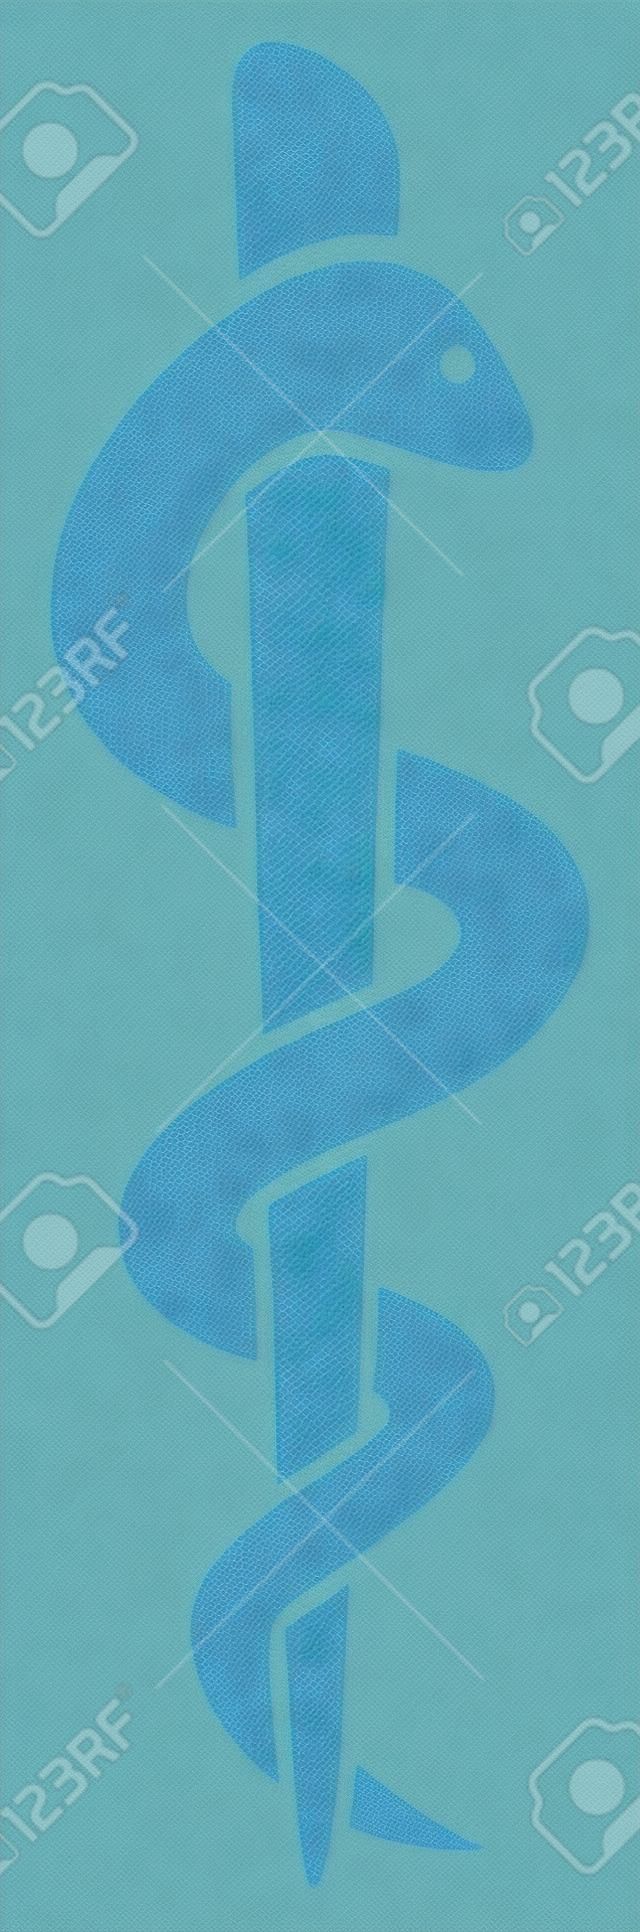 medico simbolo caduceo serpente con emblema bastone per farmacia o medicina, blu segno medico, simbolo della farmacia, serpente simbolo farmacia